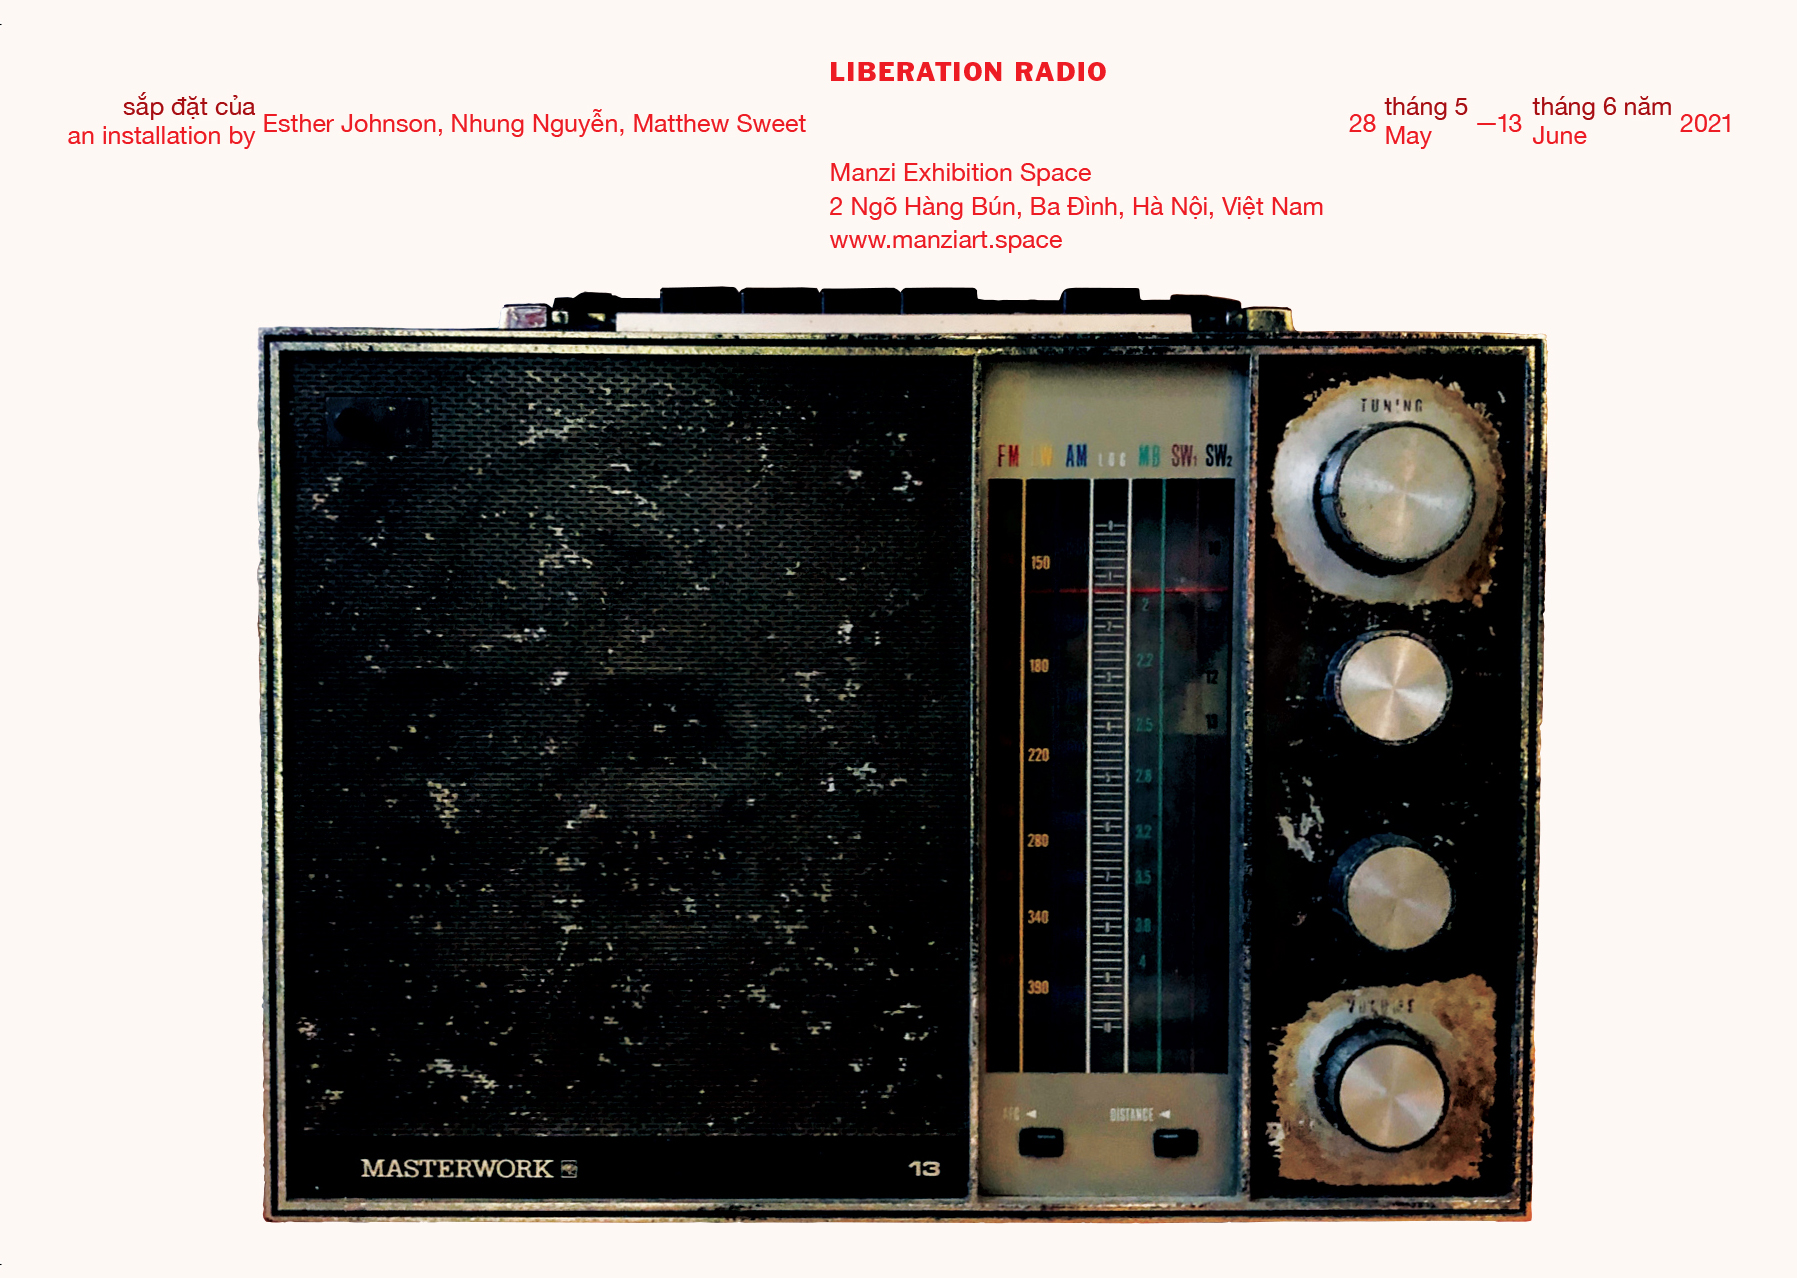 Liberation Radio 2021 exhibition postcard